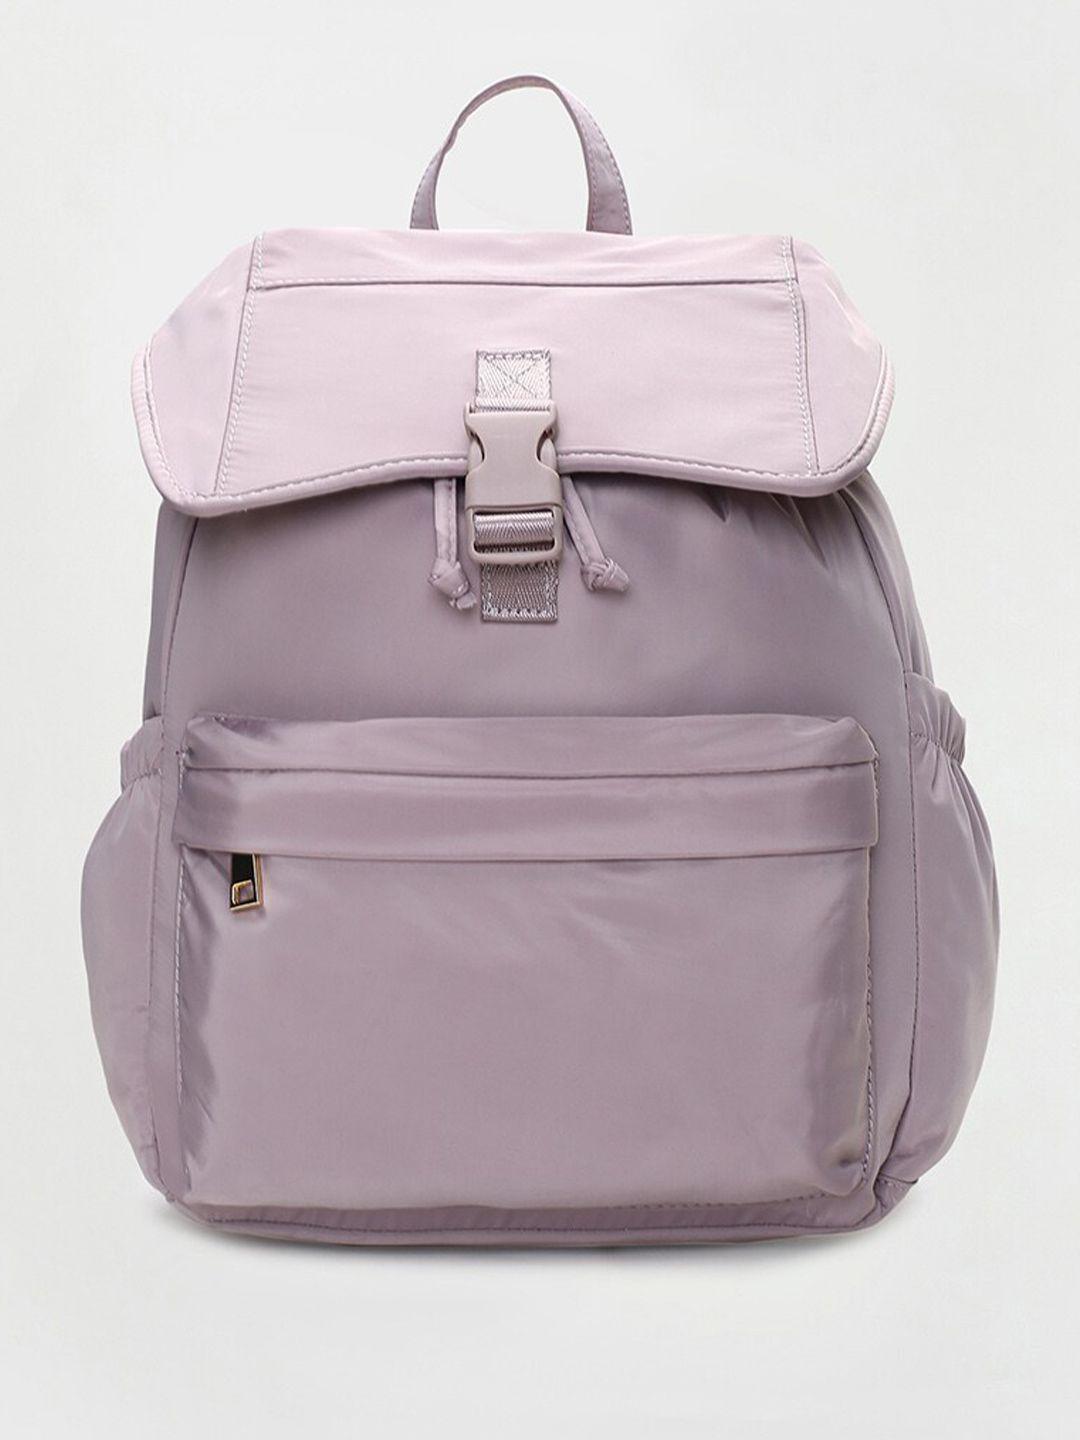 max women backpack